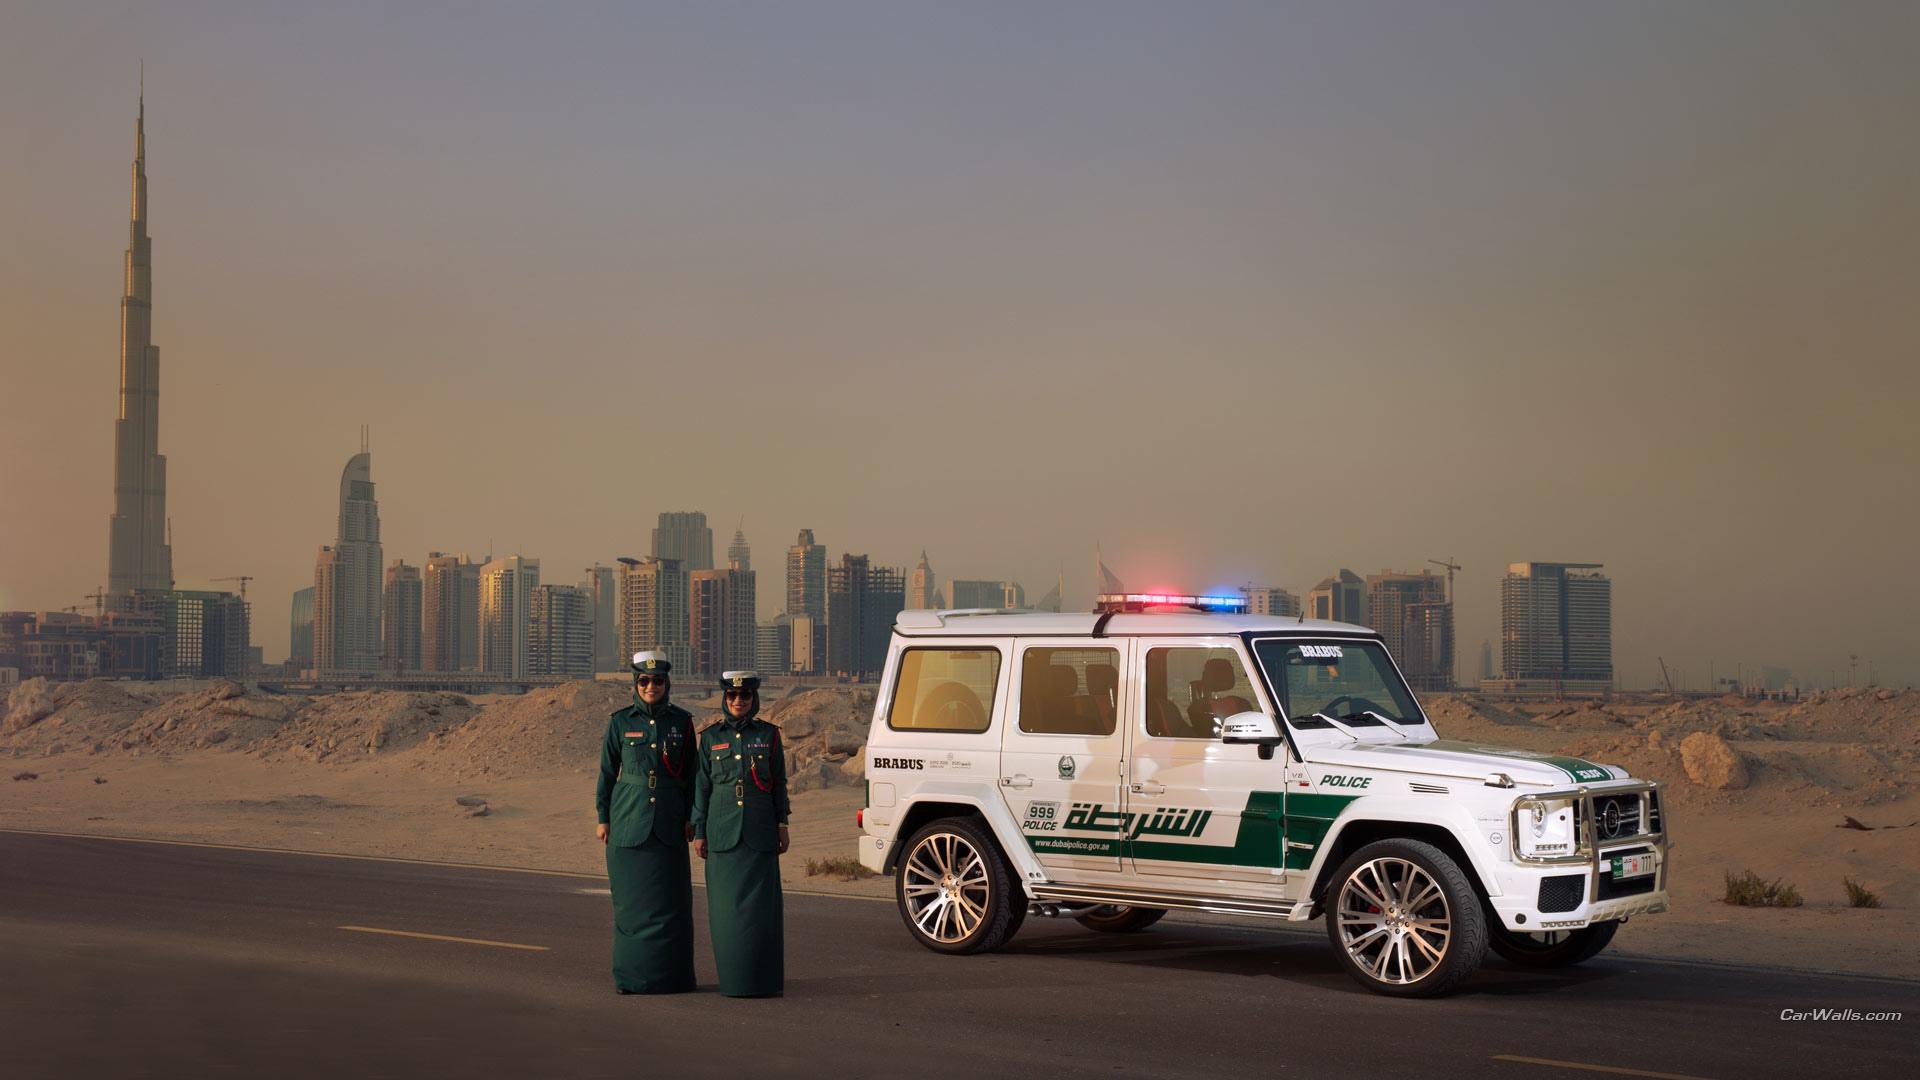 2013 Brabus B63S 700 Widestar Dubai Police Edition at 1024 x 1024 iPad size wallpapers HD quality